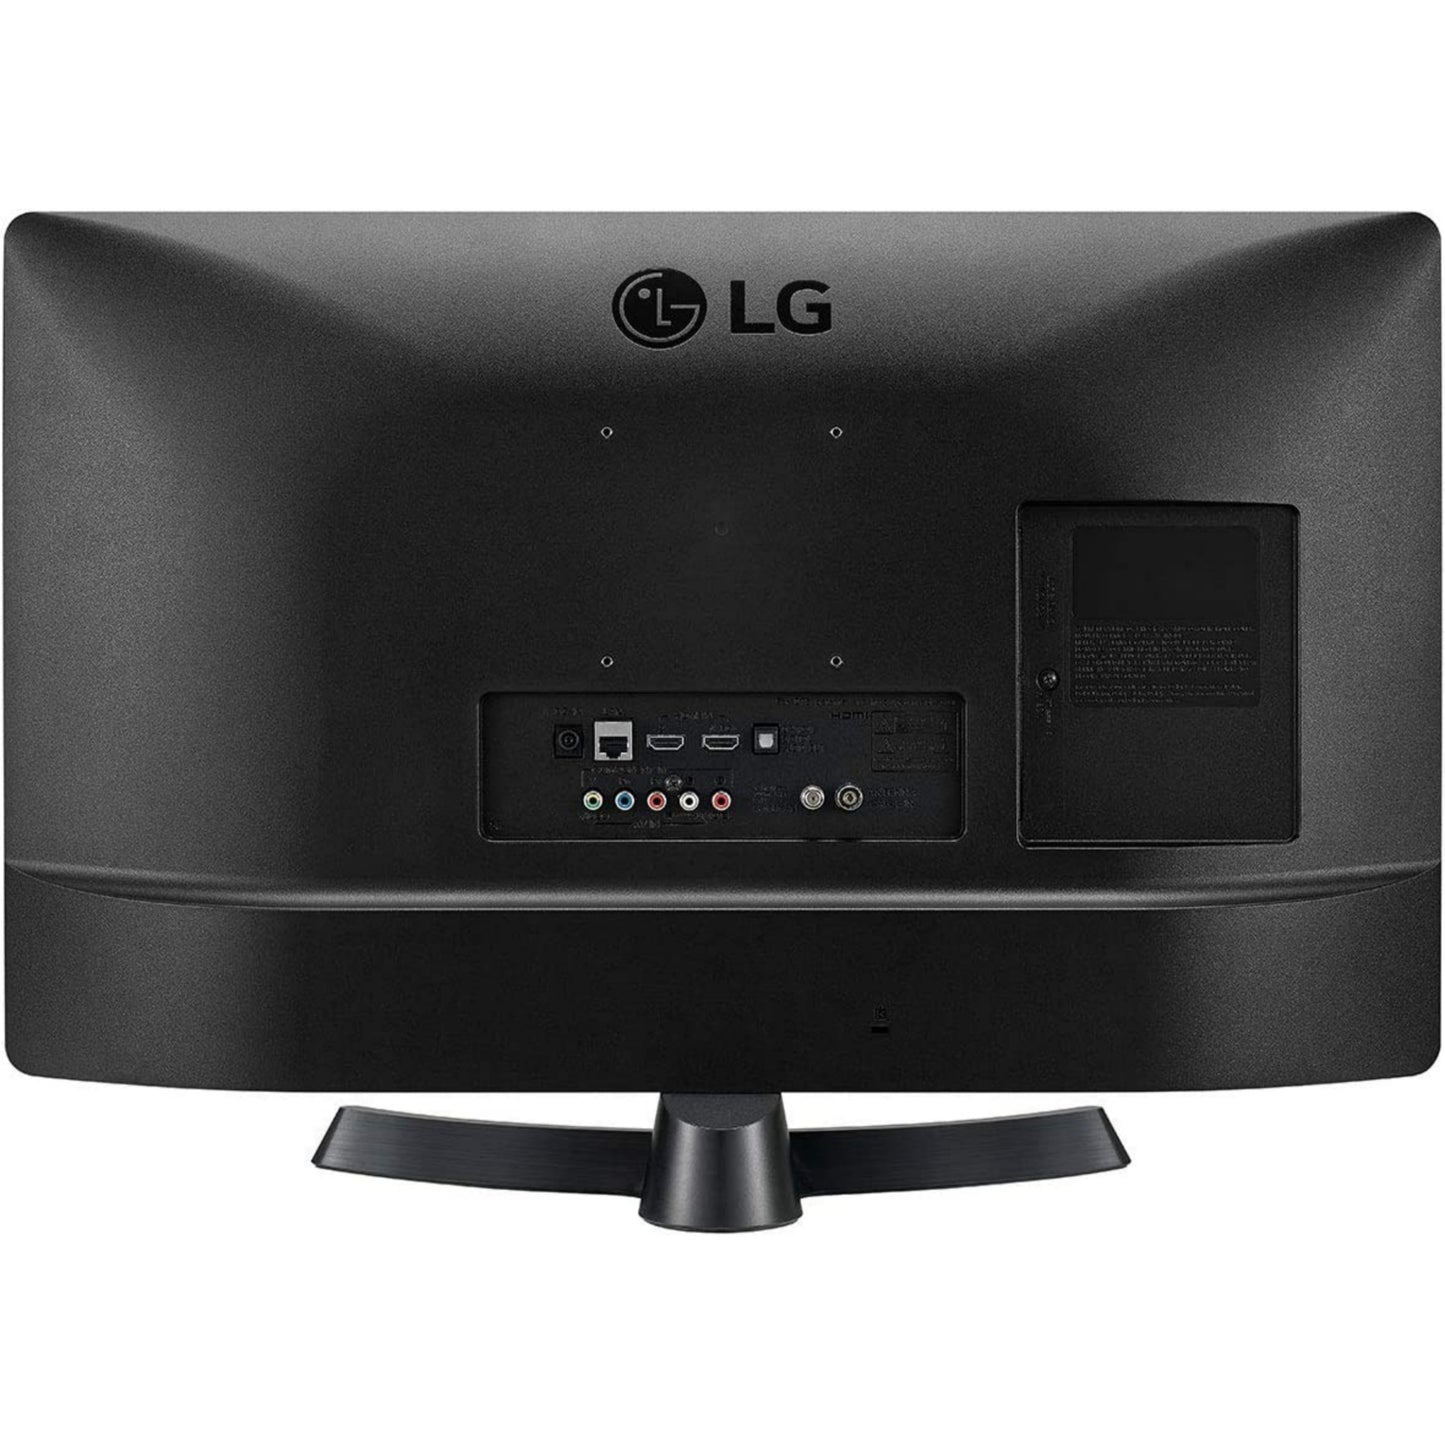 LG 28 Inch 28TL510S webOS Smart Satellite Full HD LED TV - Back View 